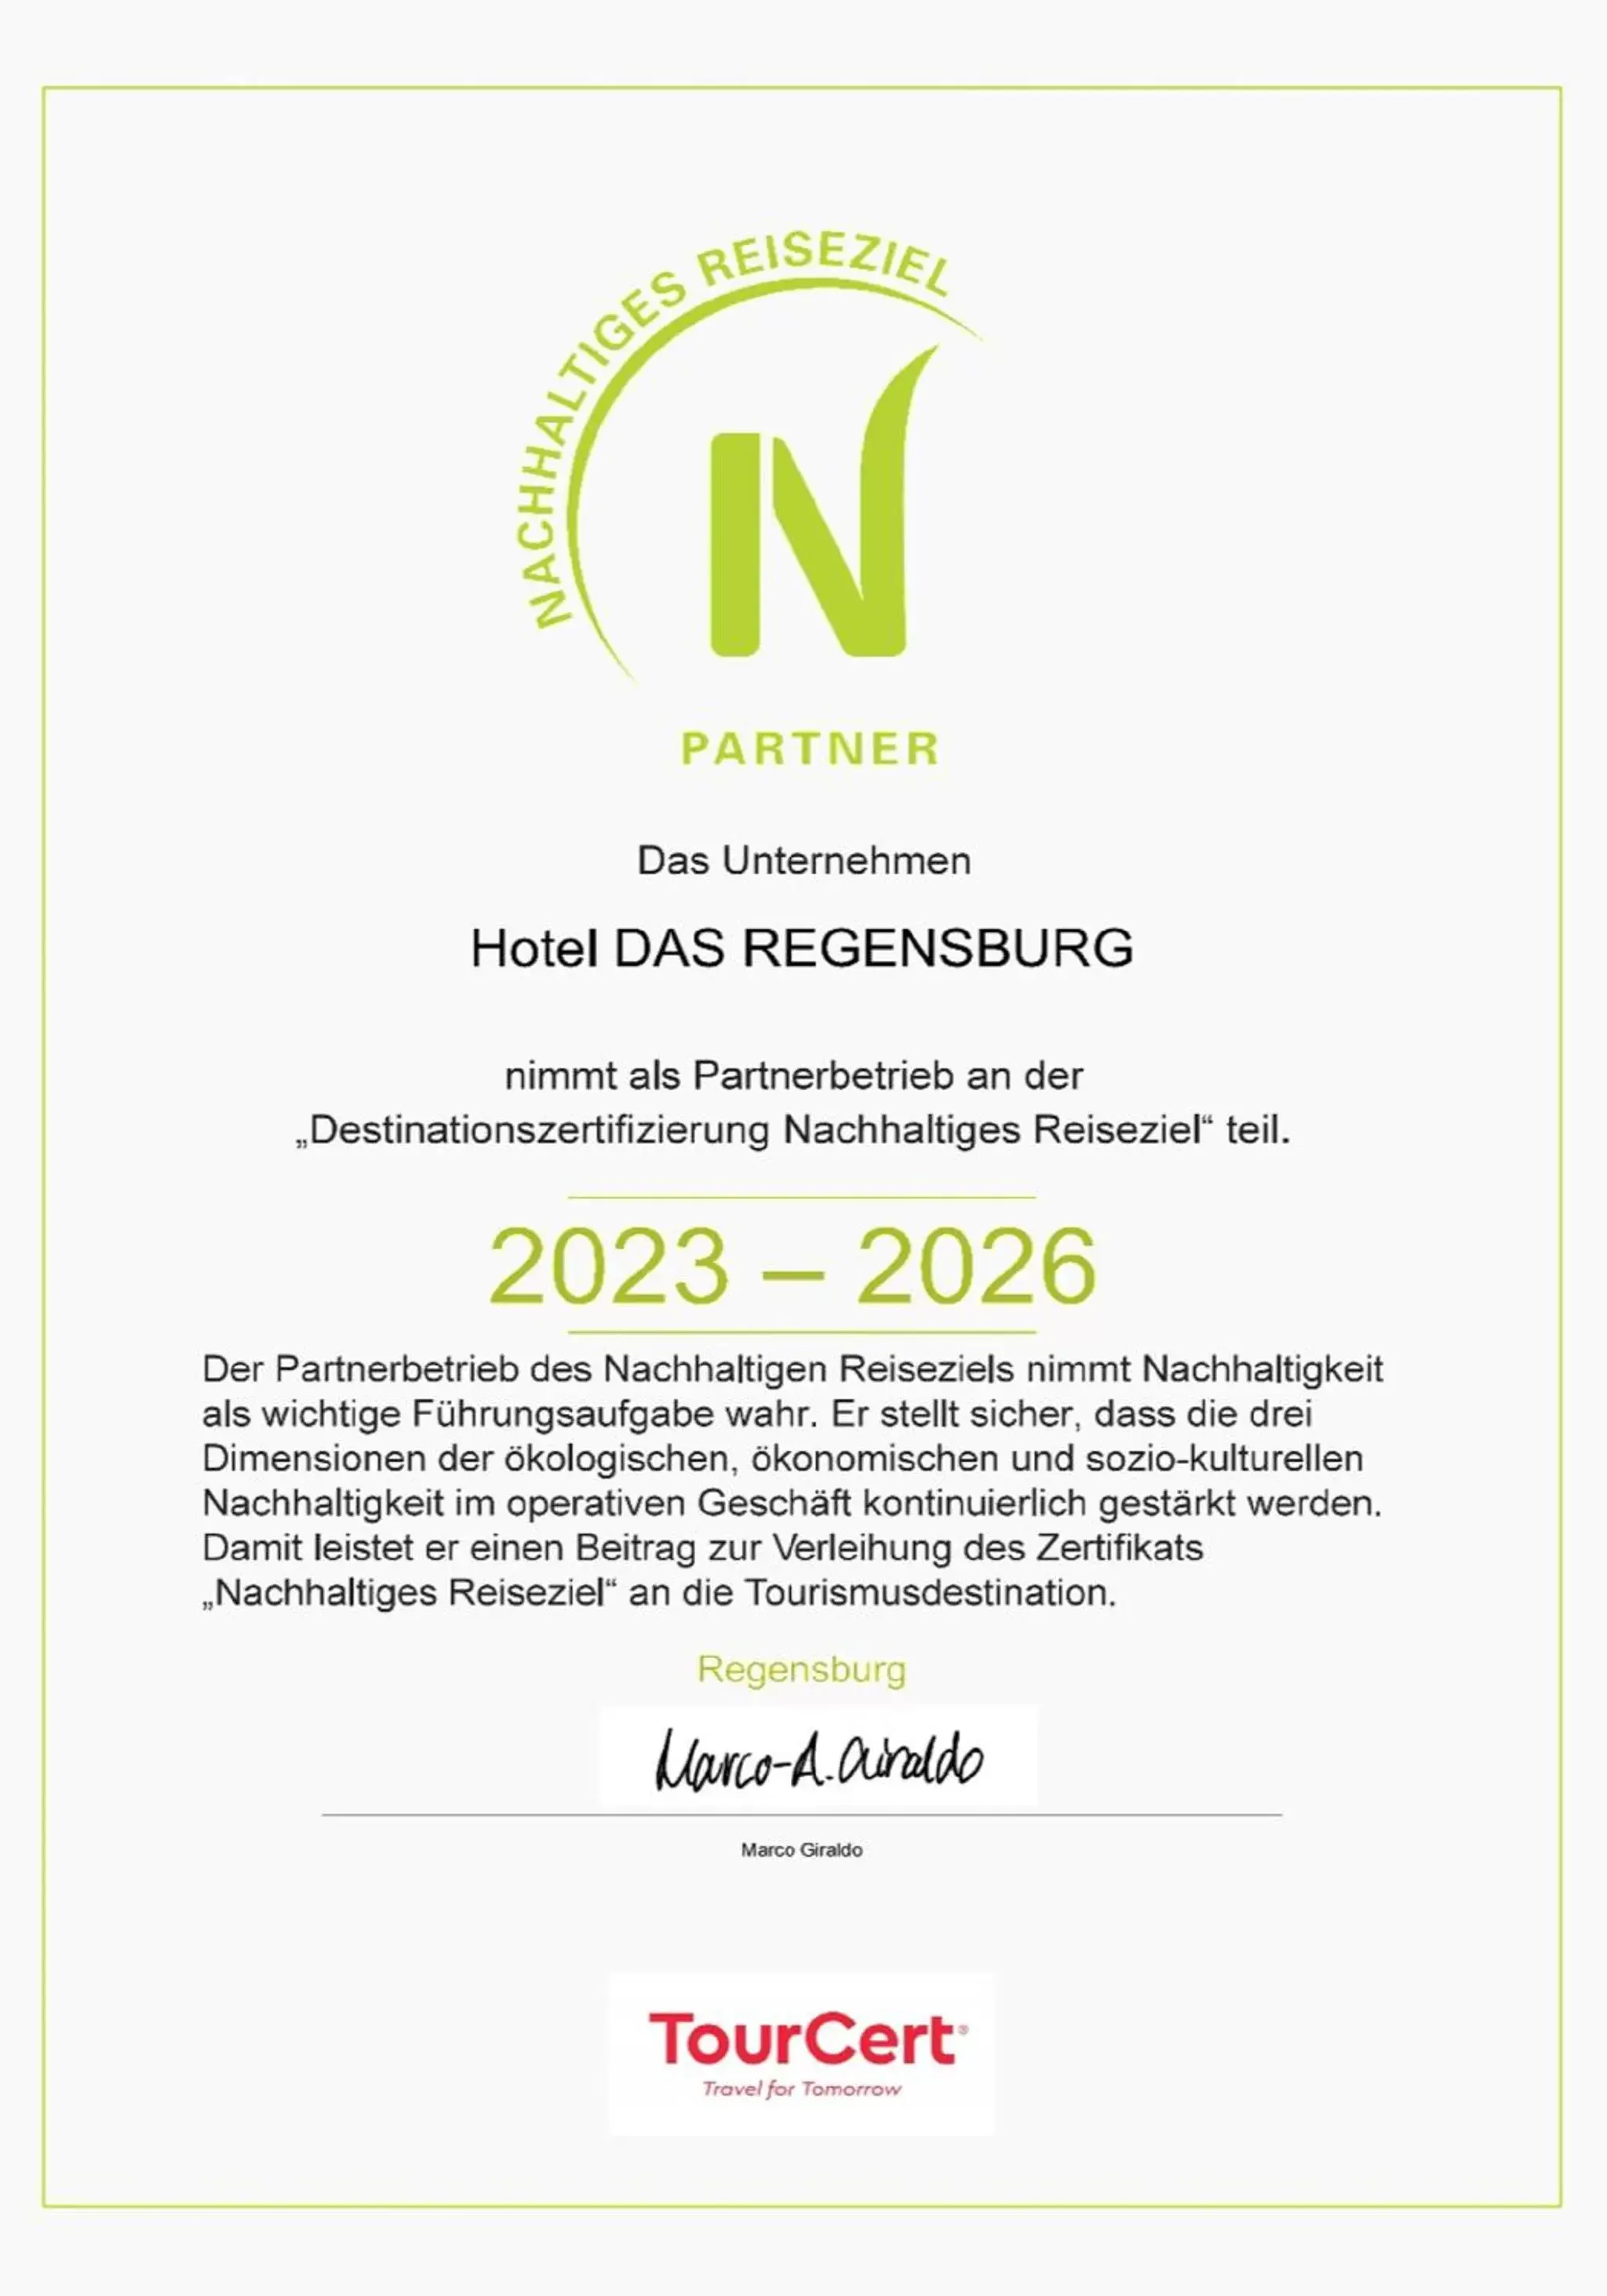 Certificate/Award in Hotel Das Regensburg